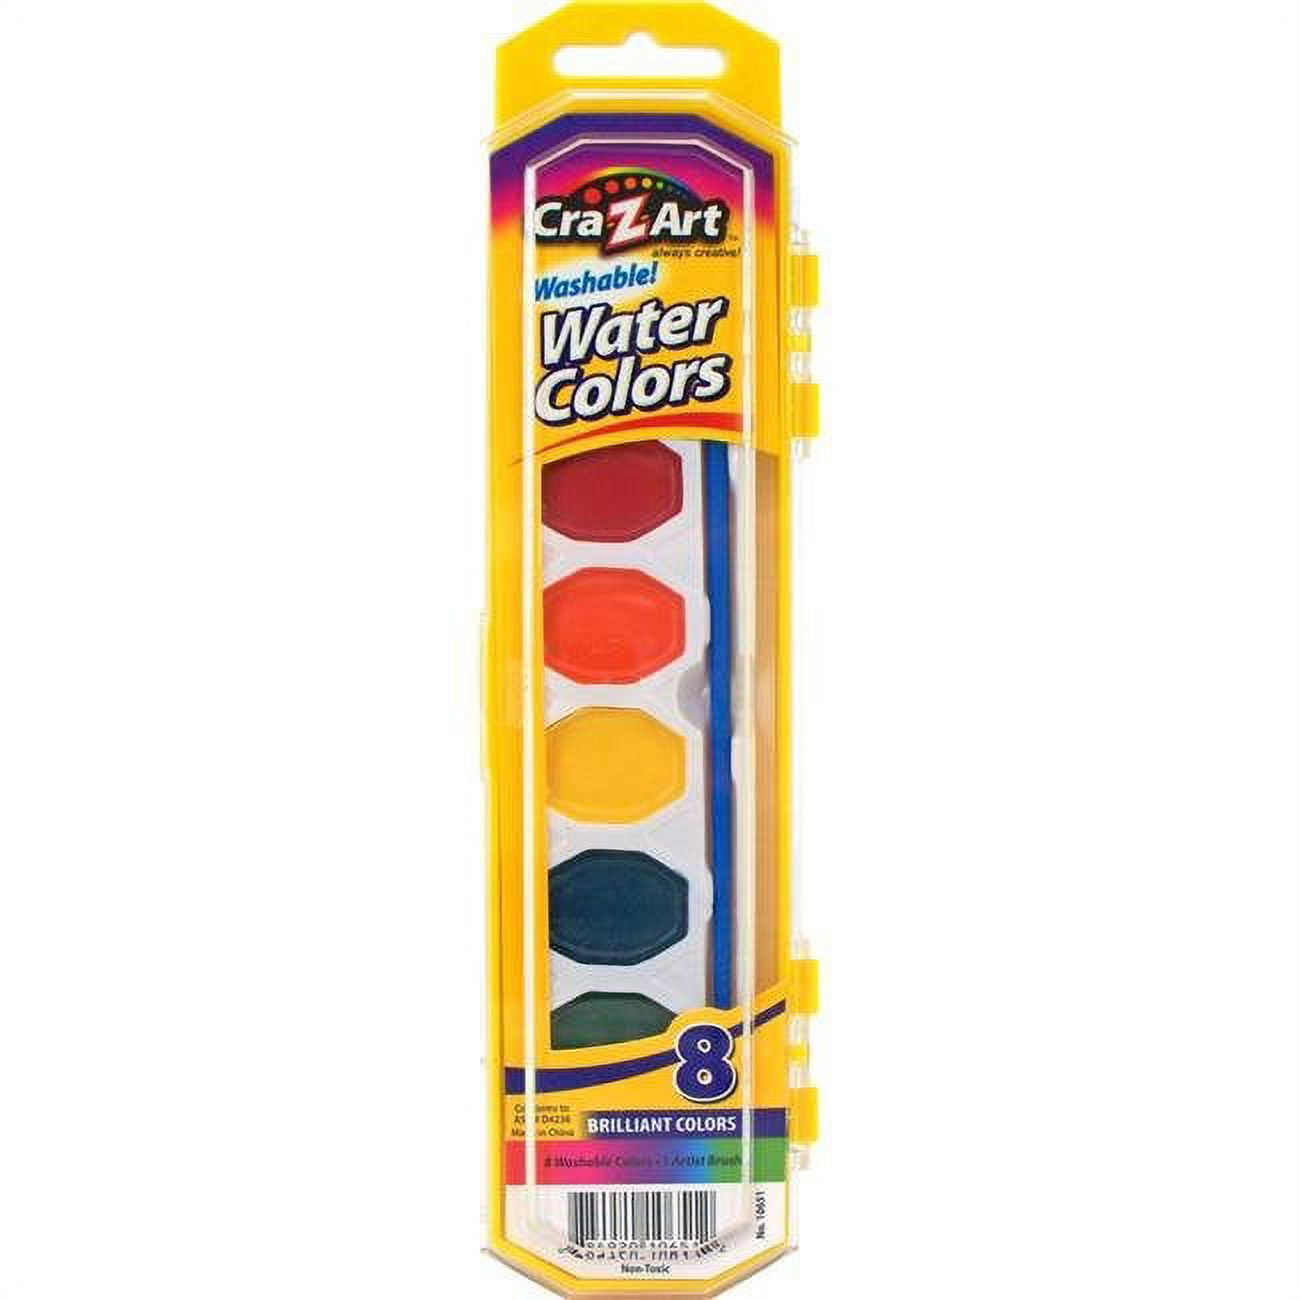 Shuttle Art 12 Colors Watercolor Paint Set Bulk, 60 Pack, Watercolor Paint Set with Paint Brushes for Kids and Adults, Washable Paint for Classroom, P